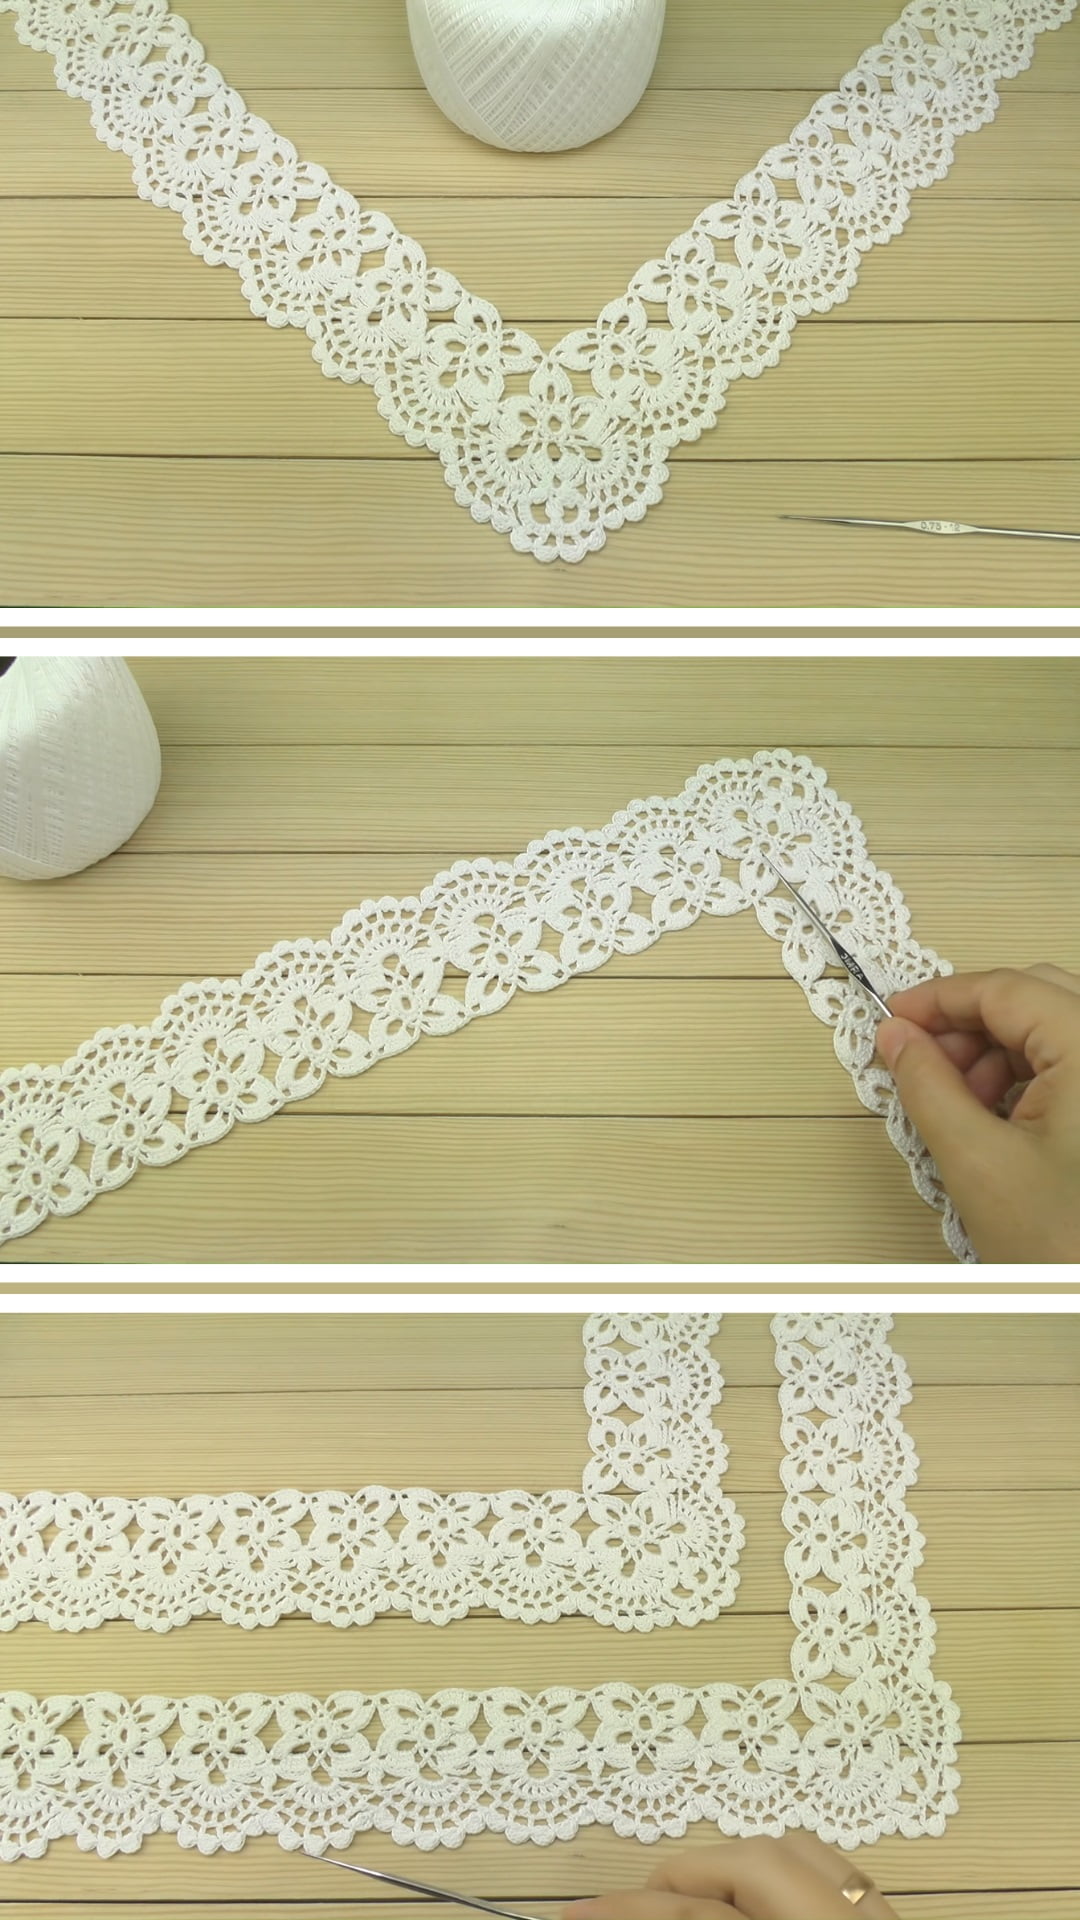 Crochet Border for Doily Tablecloth